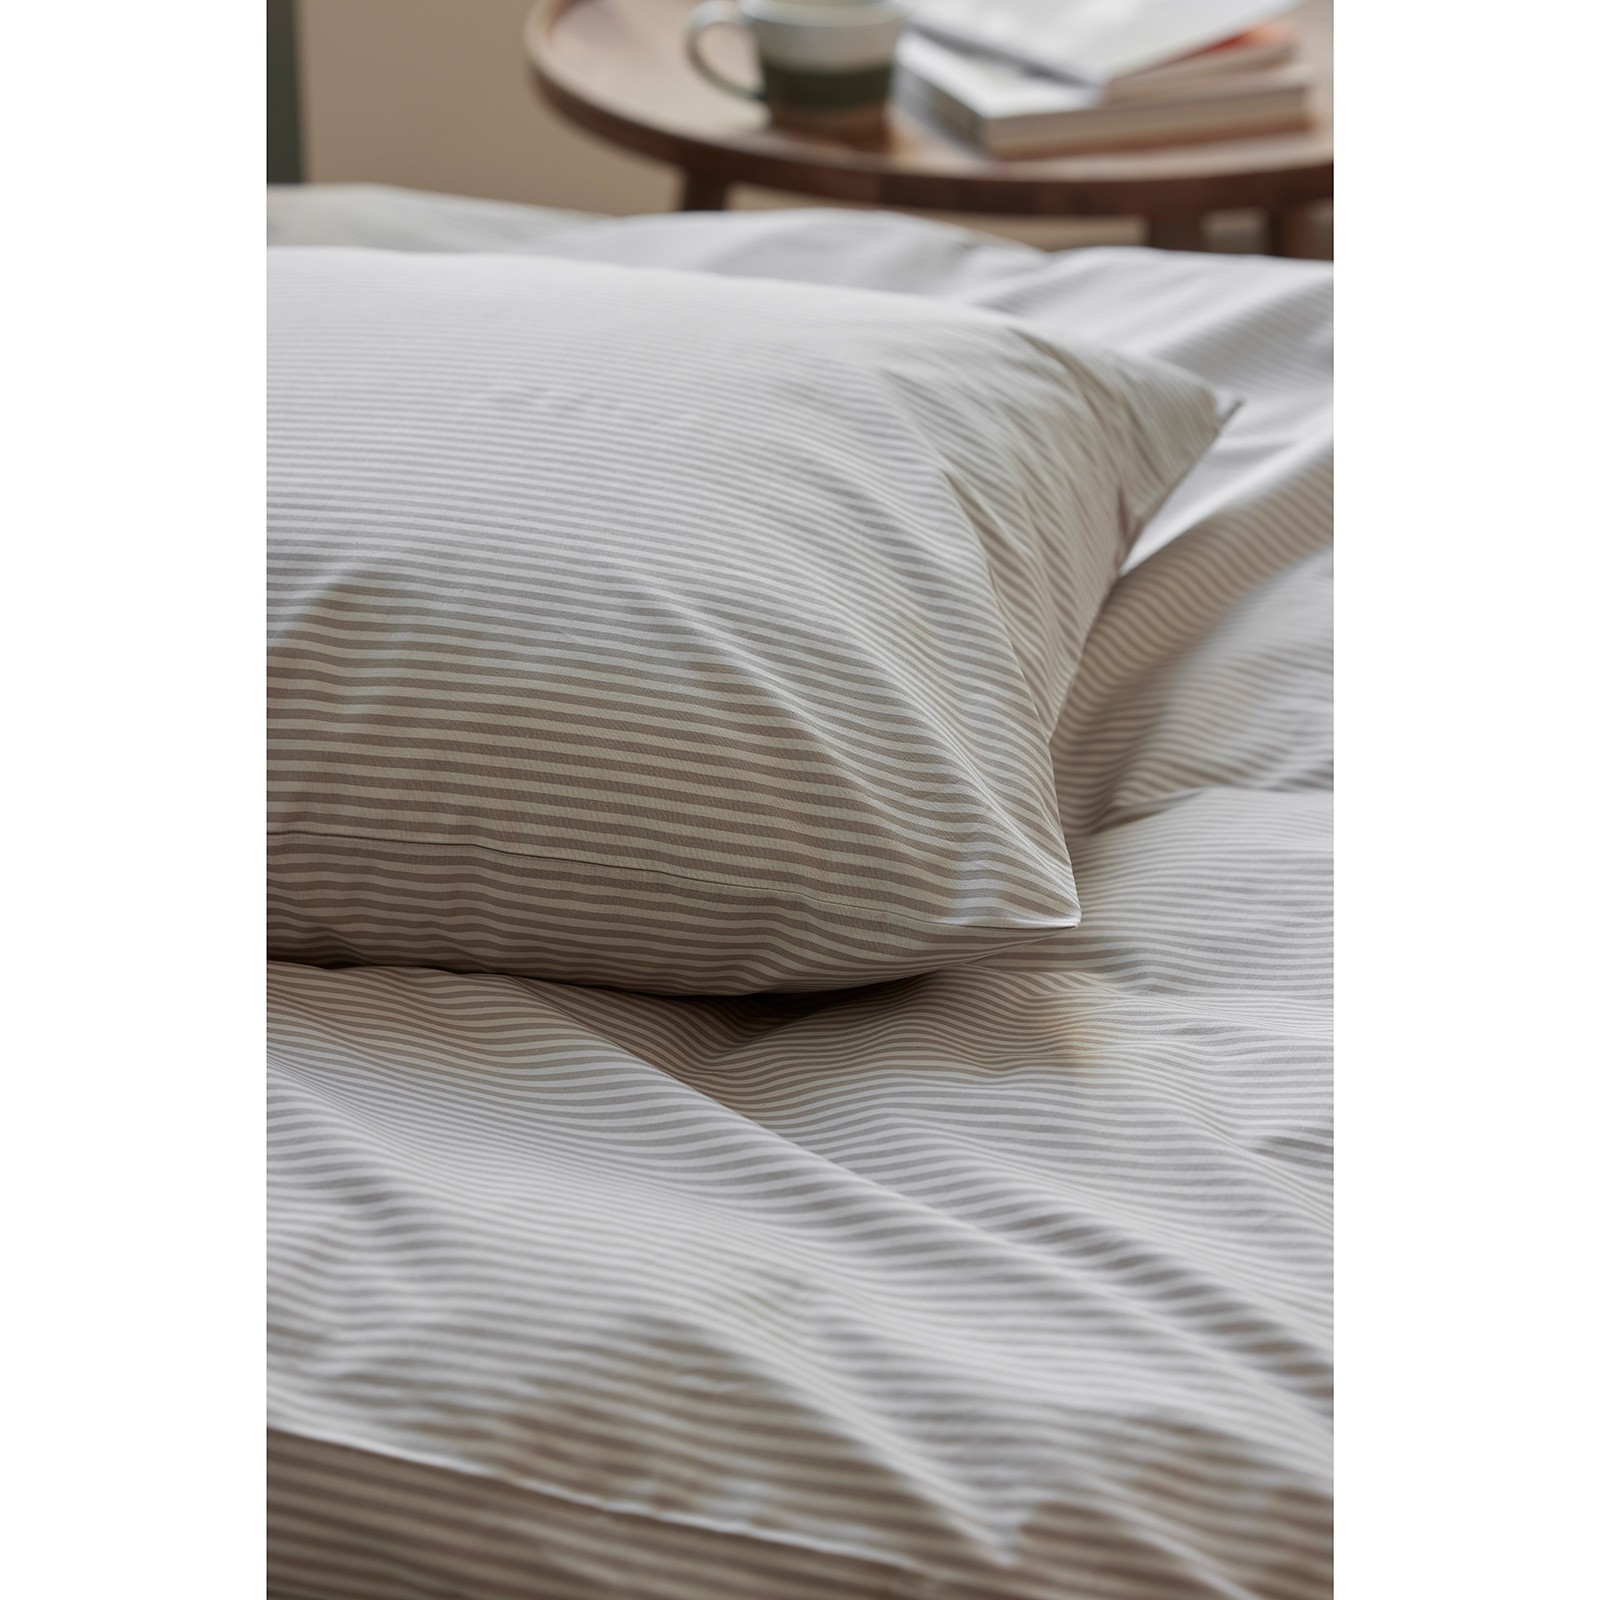 Södahl Classic Stripe sengetøj 140x200cm Taupe 2sæt